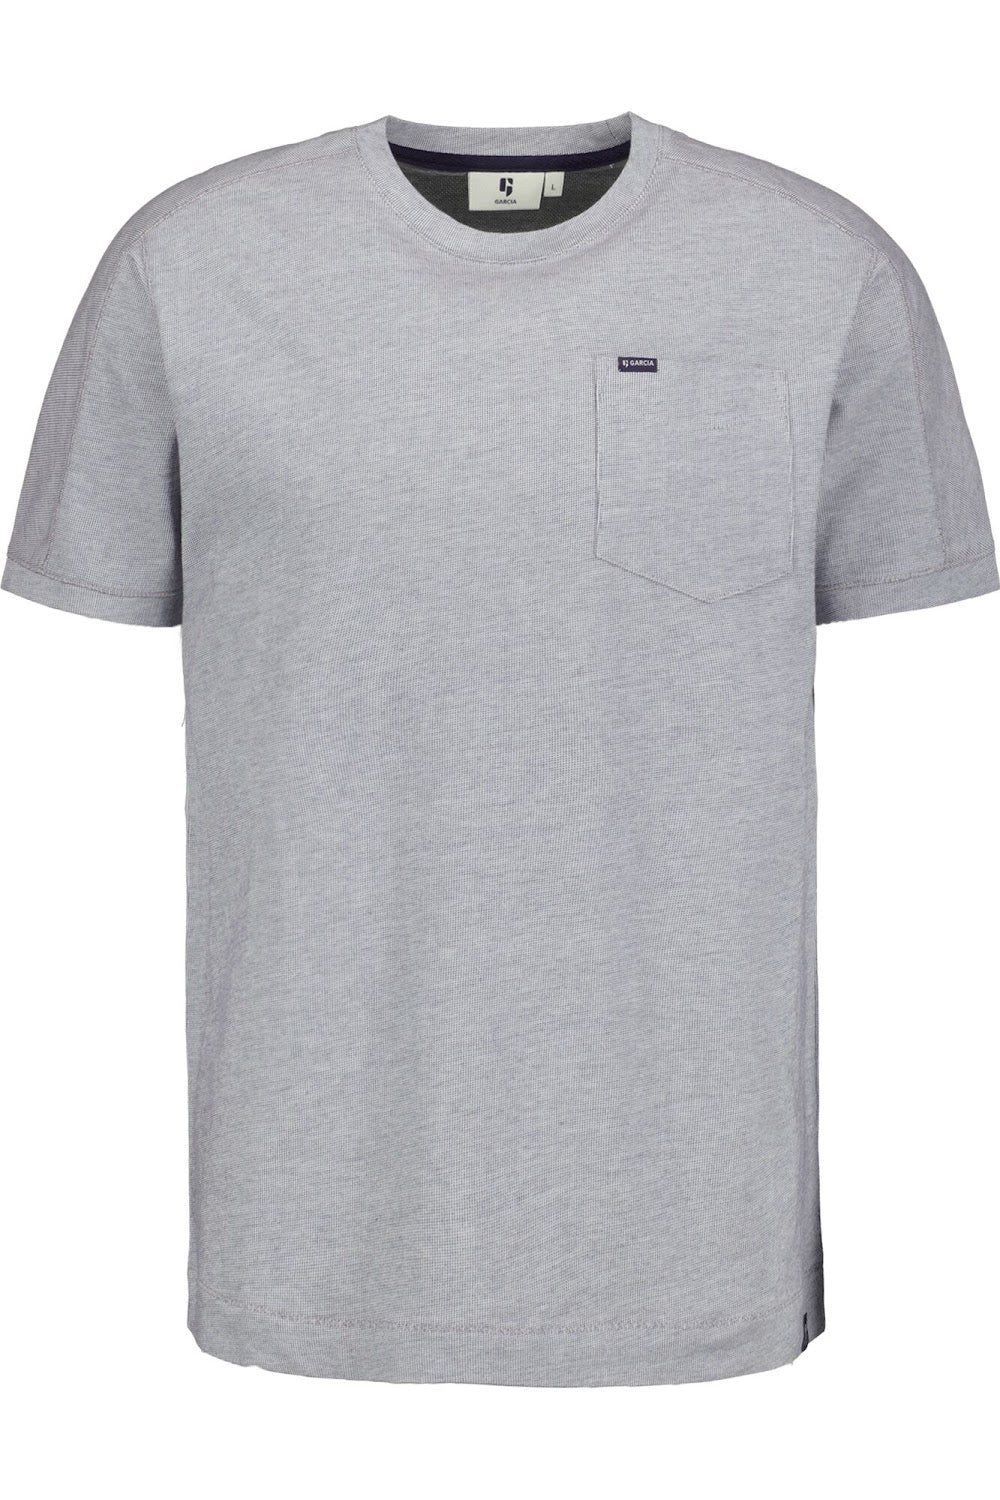 GARCIA Men's T-Shirt - Grey